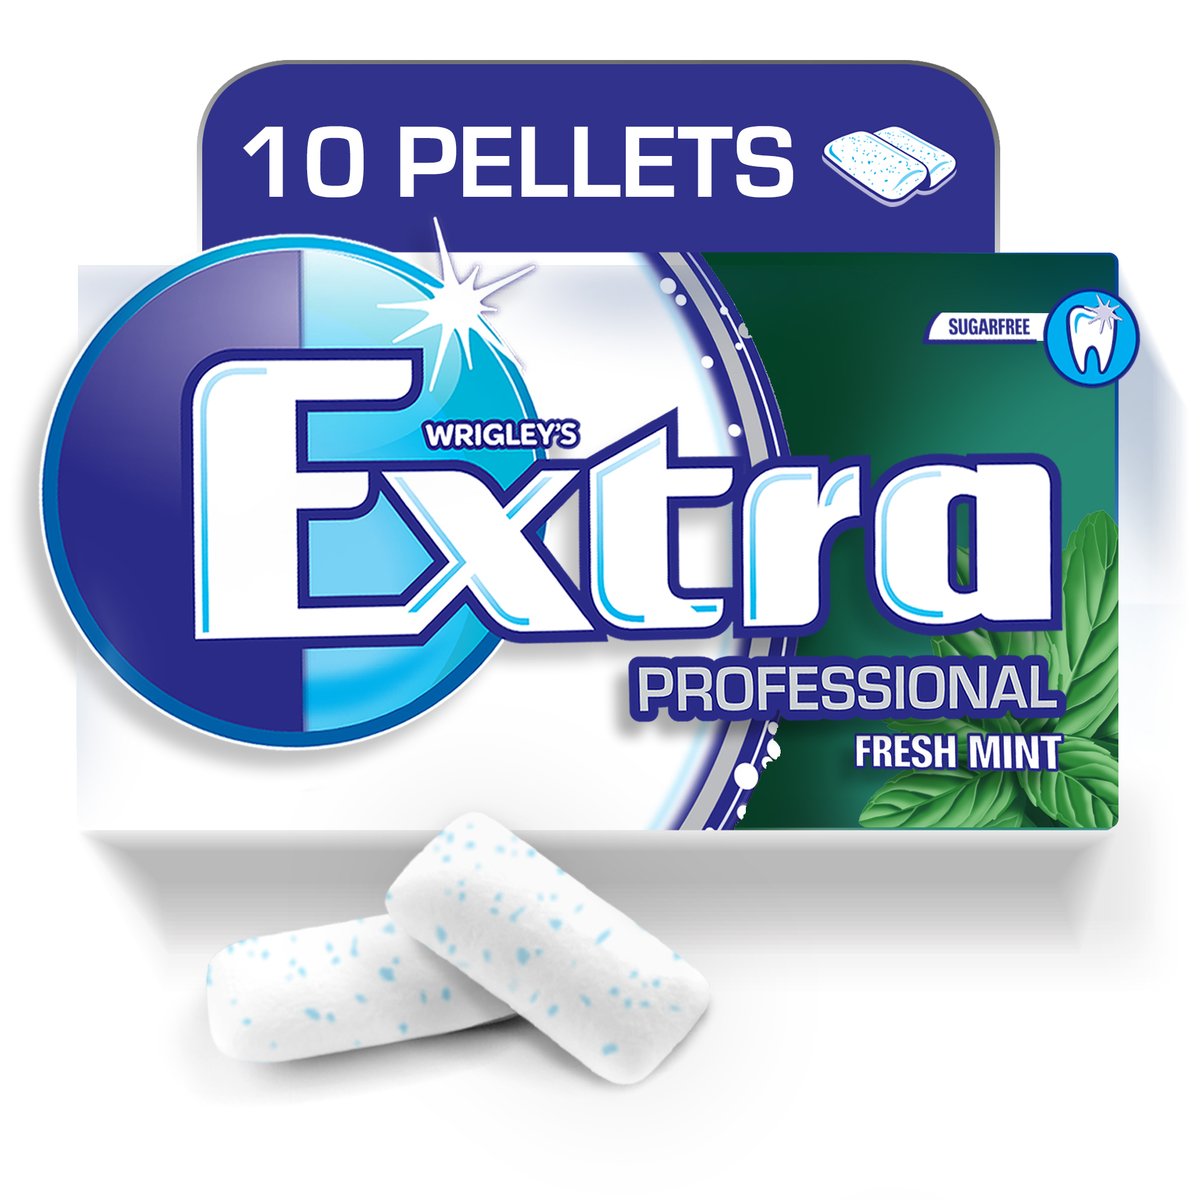 Wrigley's Extra Professional Fresh Mint Gum 10 pcs